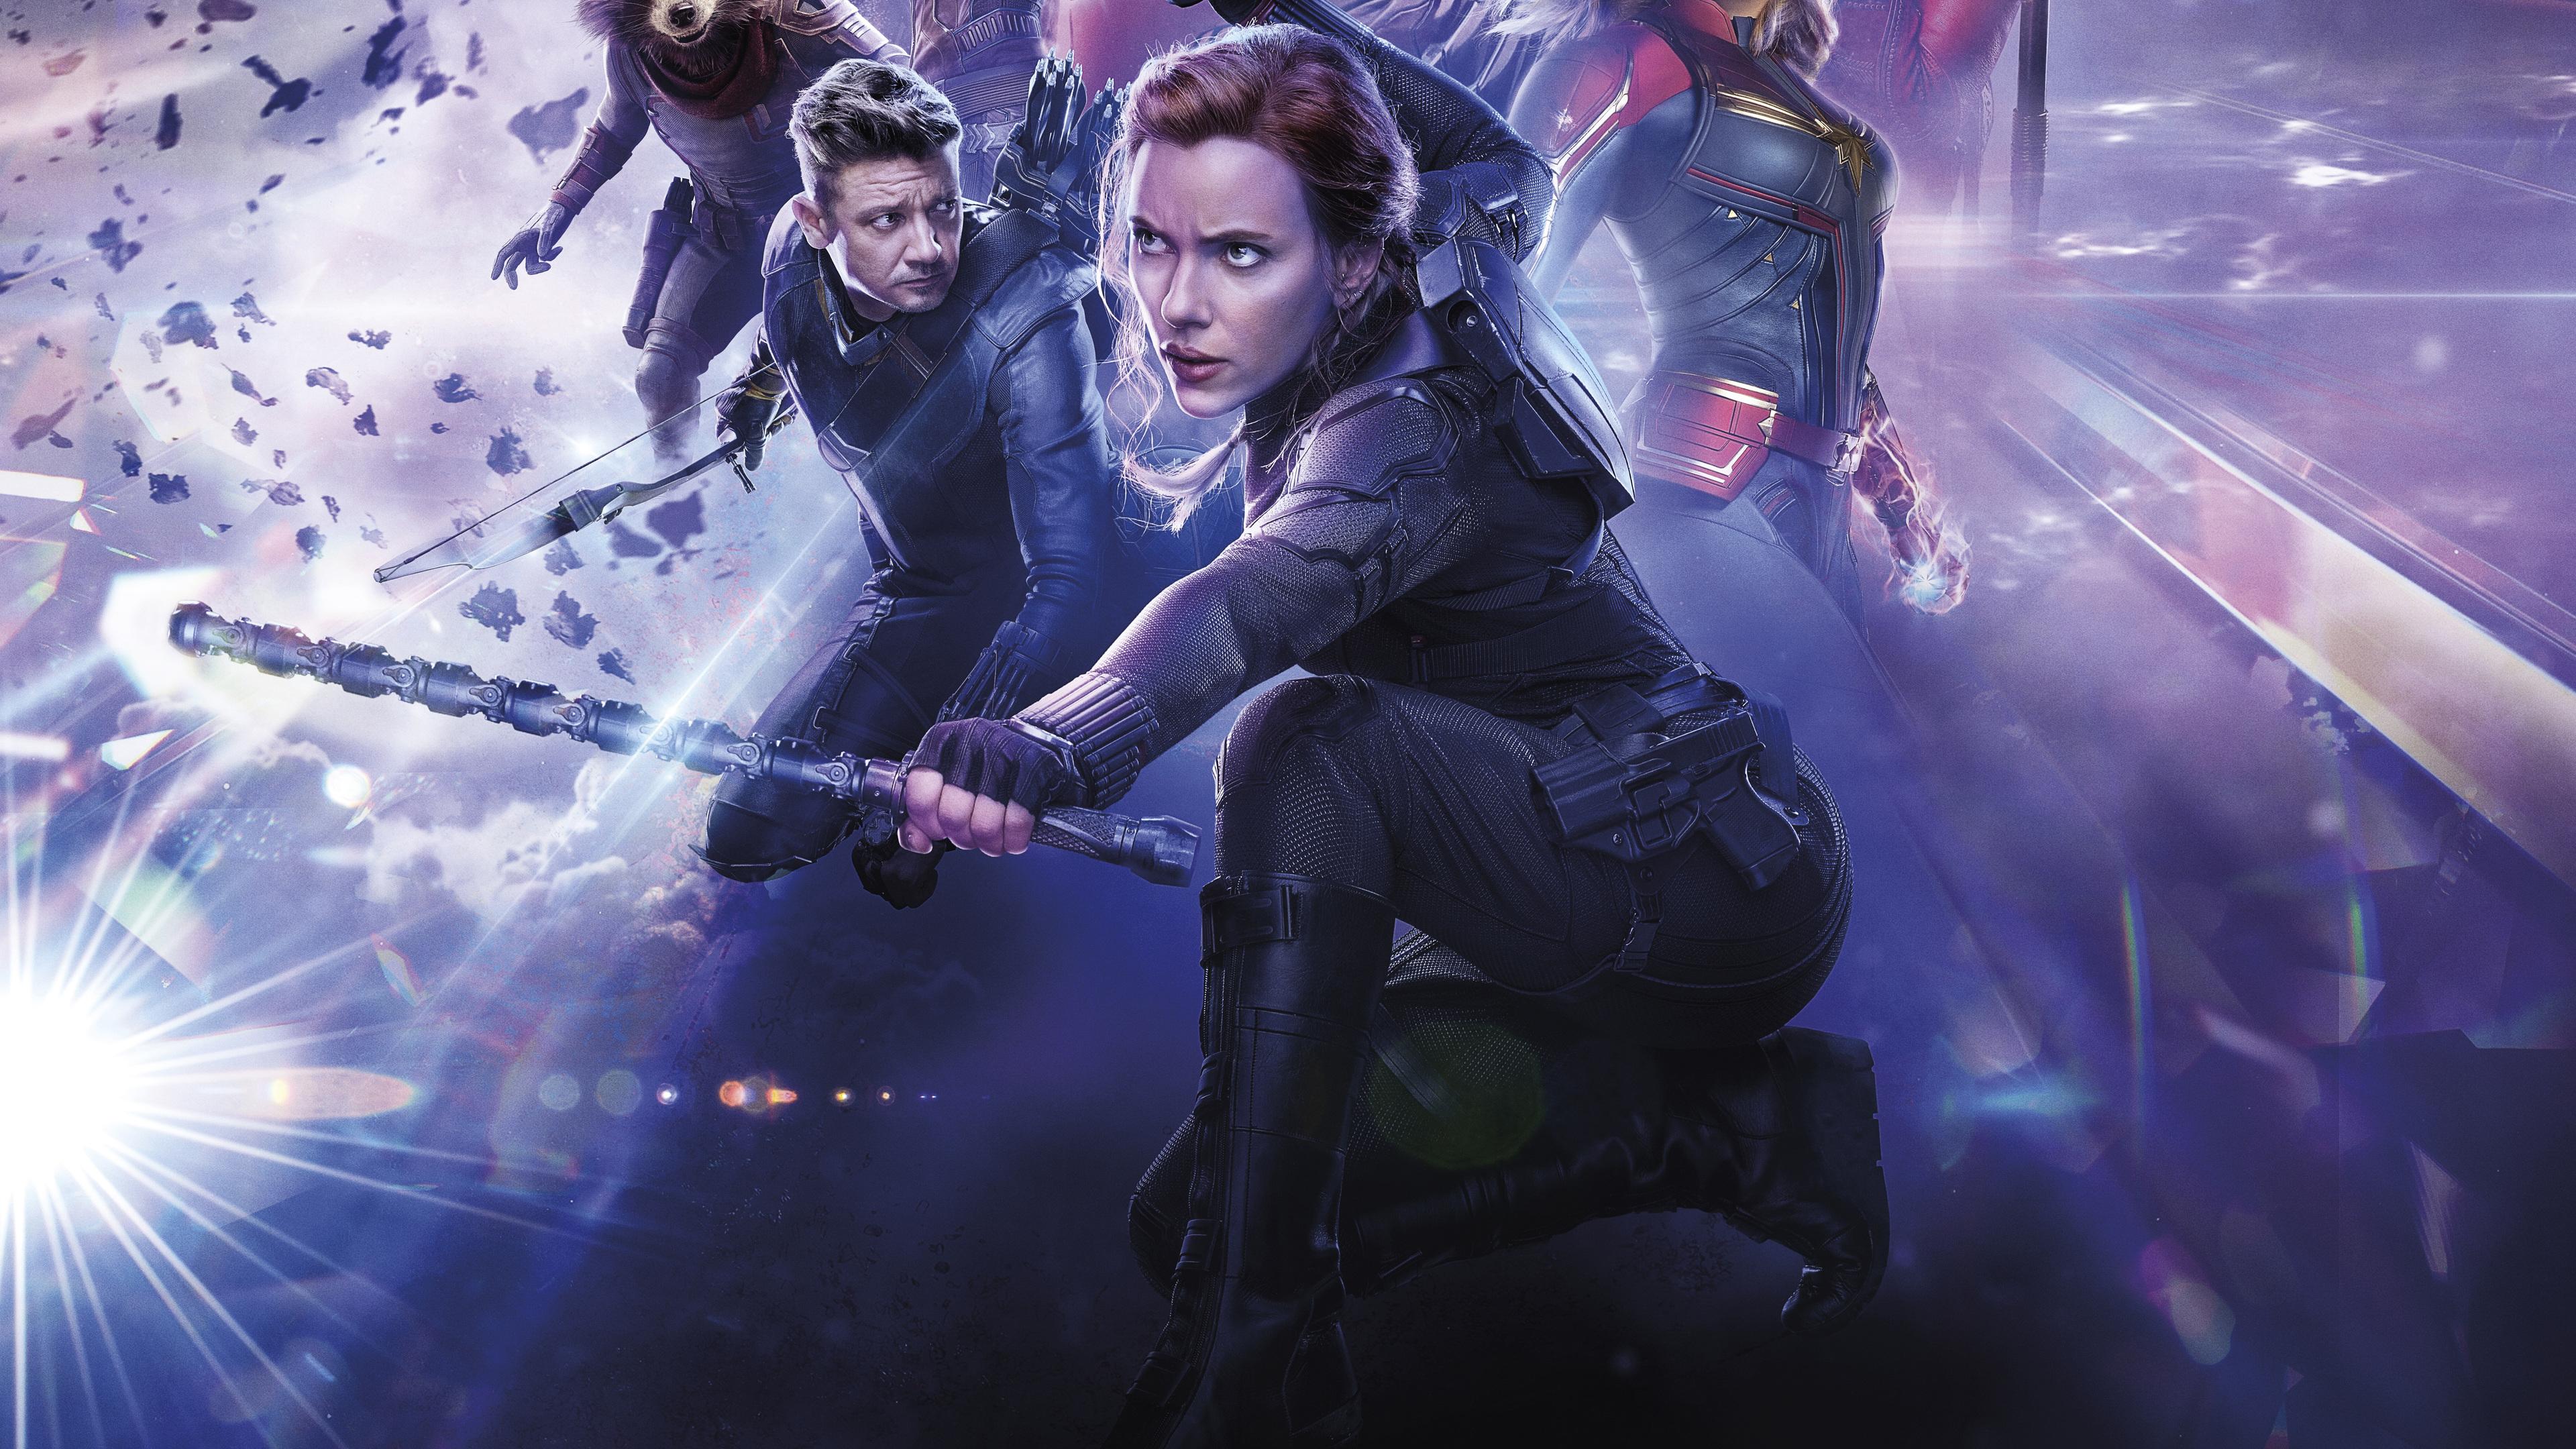 Wallpaper 4k Black Widow Avengers Endgame 4k 2019 movies wallpaper